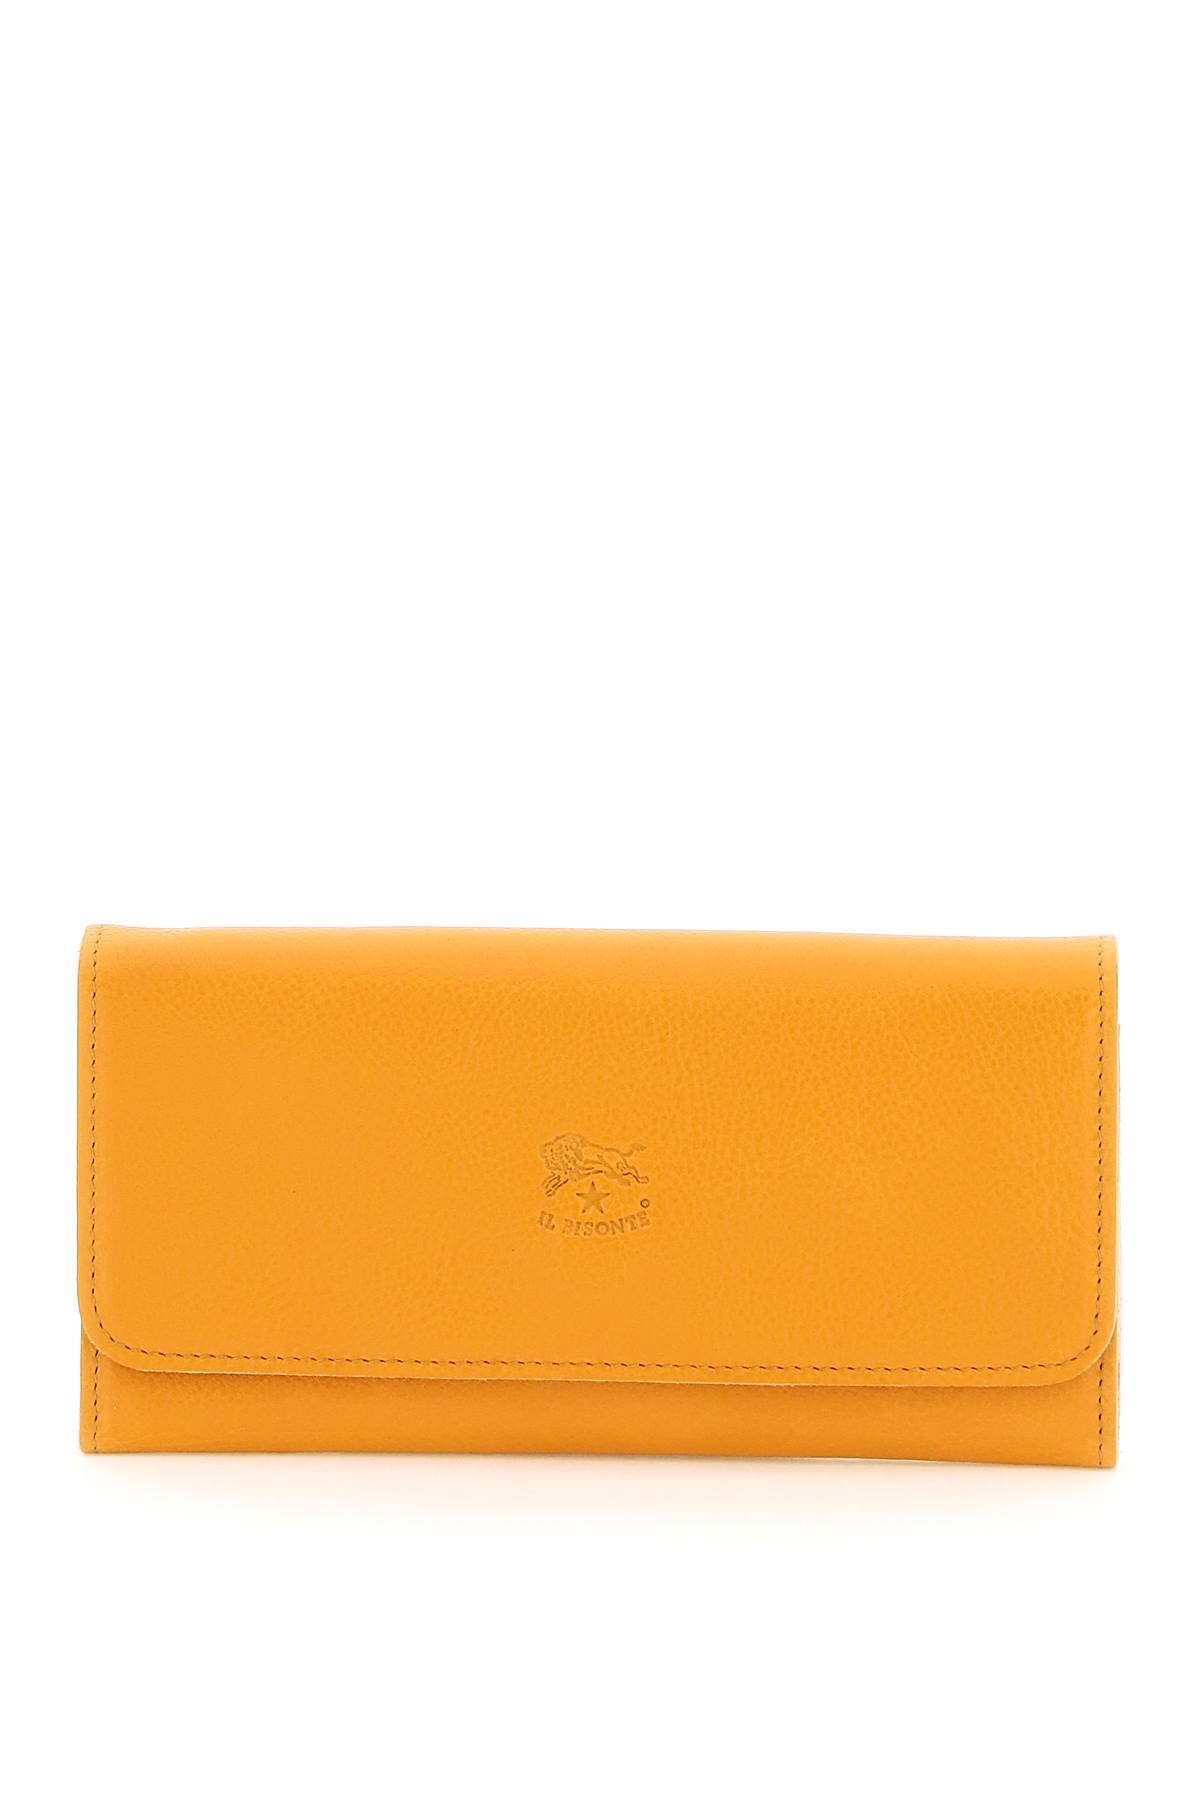 Il Bisonte Leather Wallet